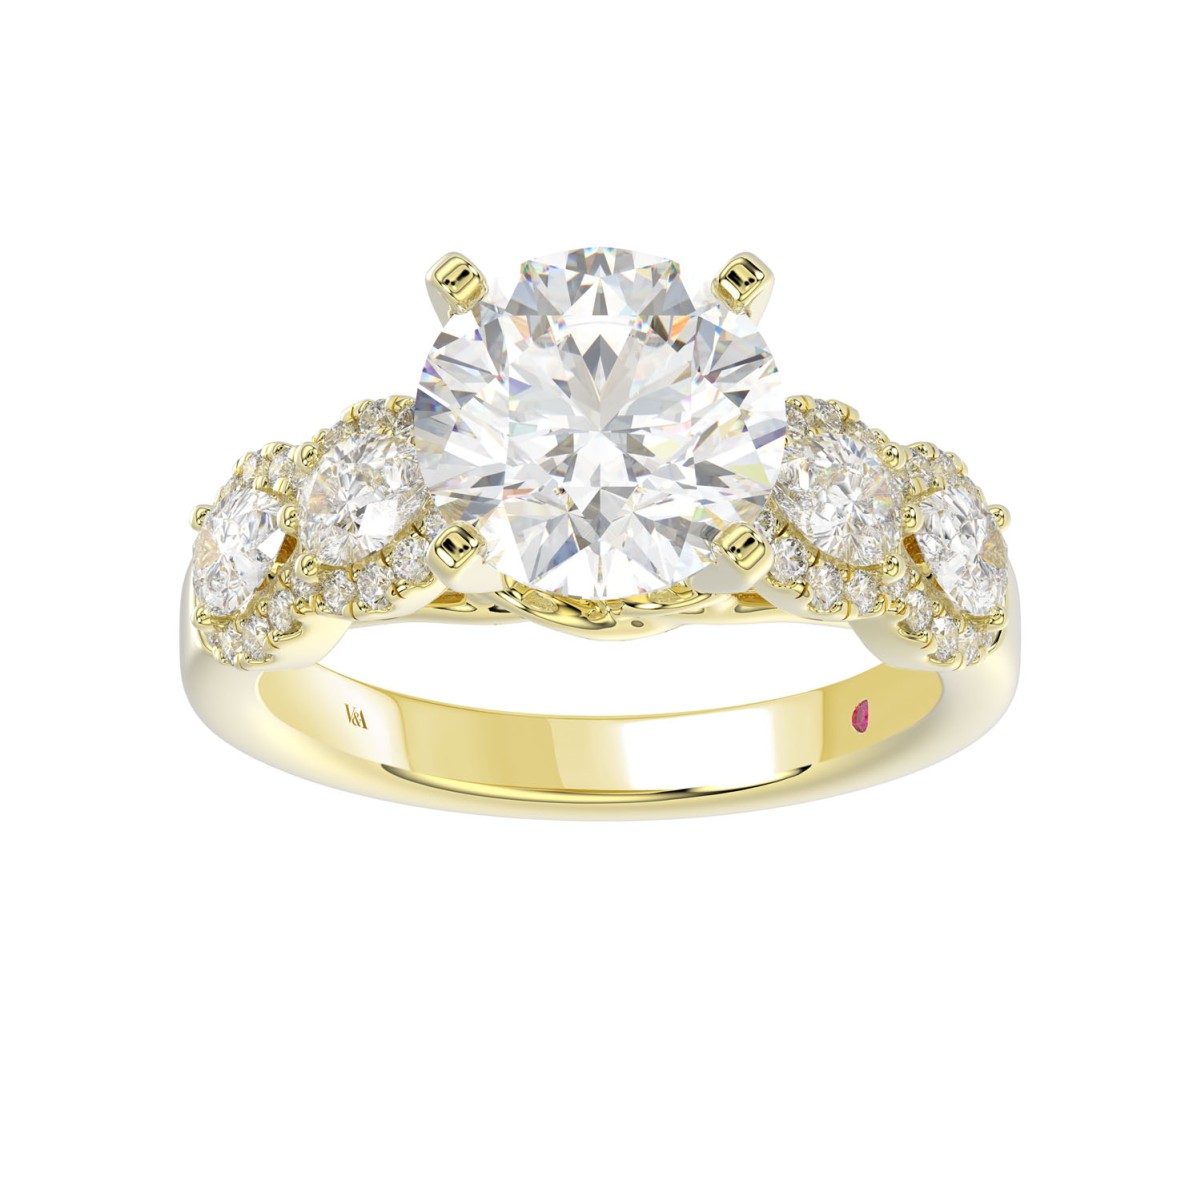 18 K YELLOW GOLD 4CT ROUND/PEAR DIAMOND LADIES RING(CENTER STONE ROUND DIAMOND 3CT)